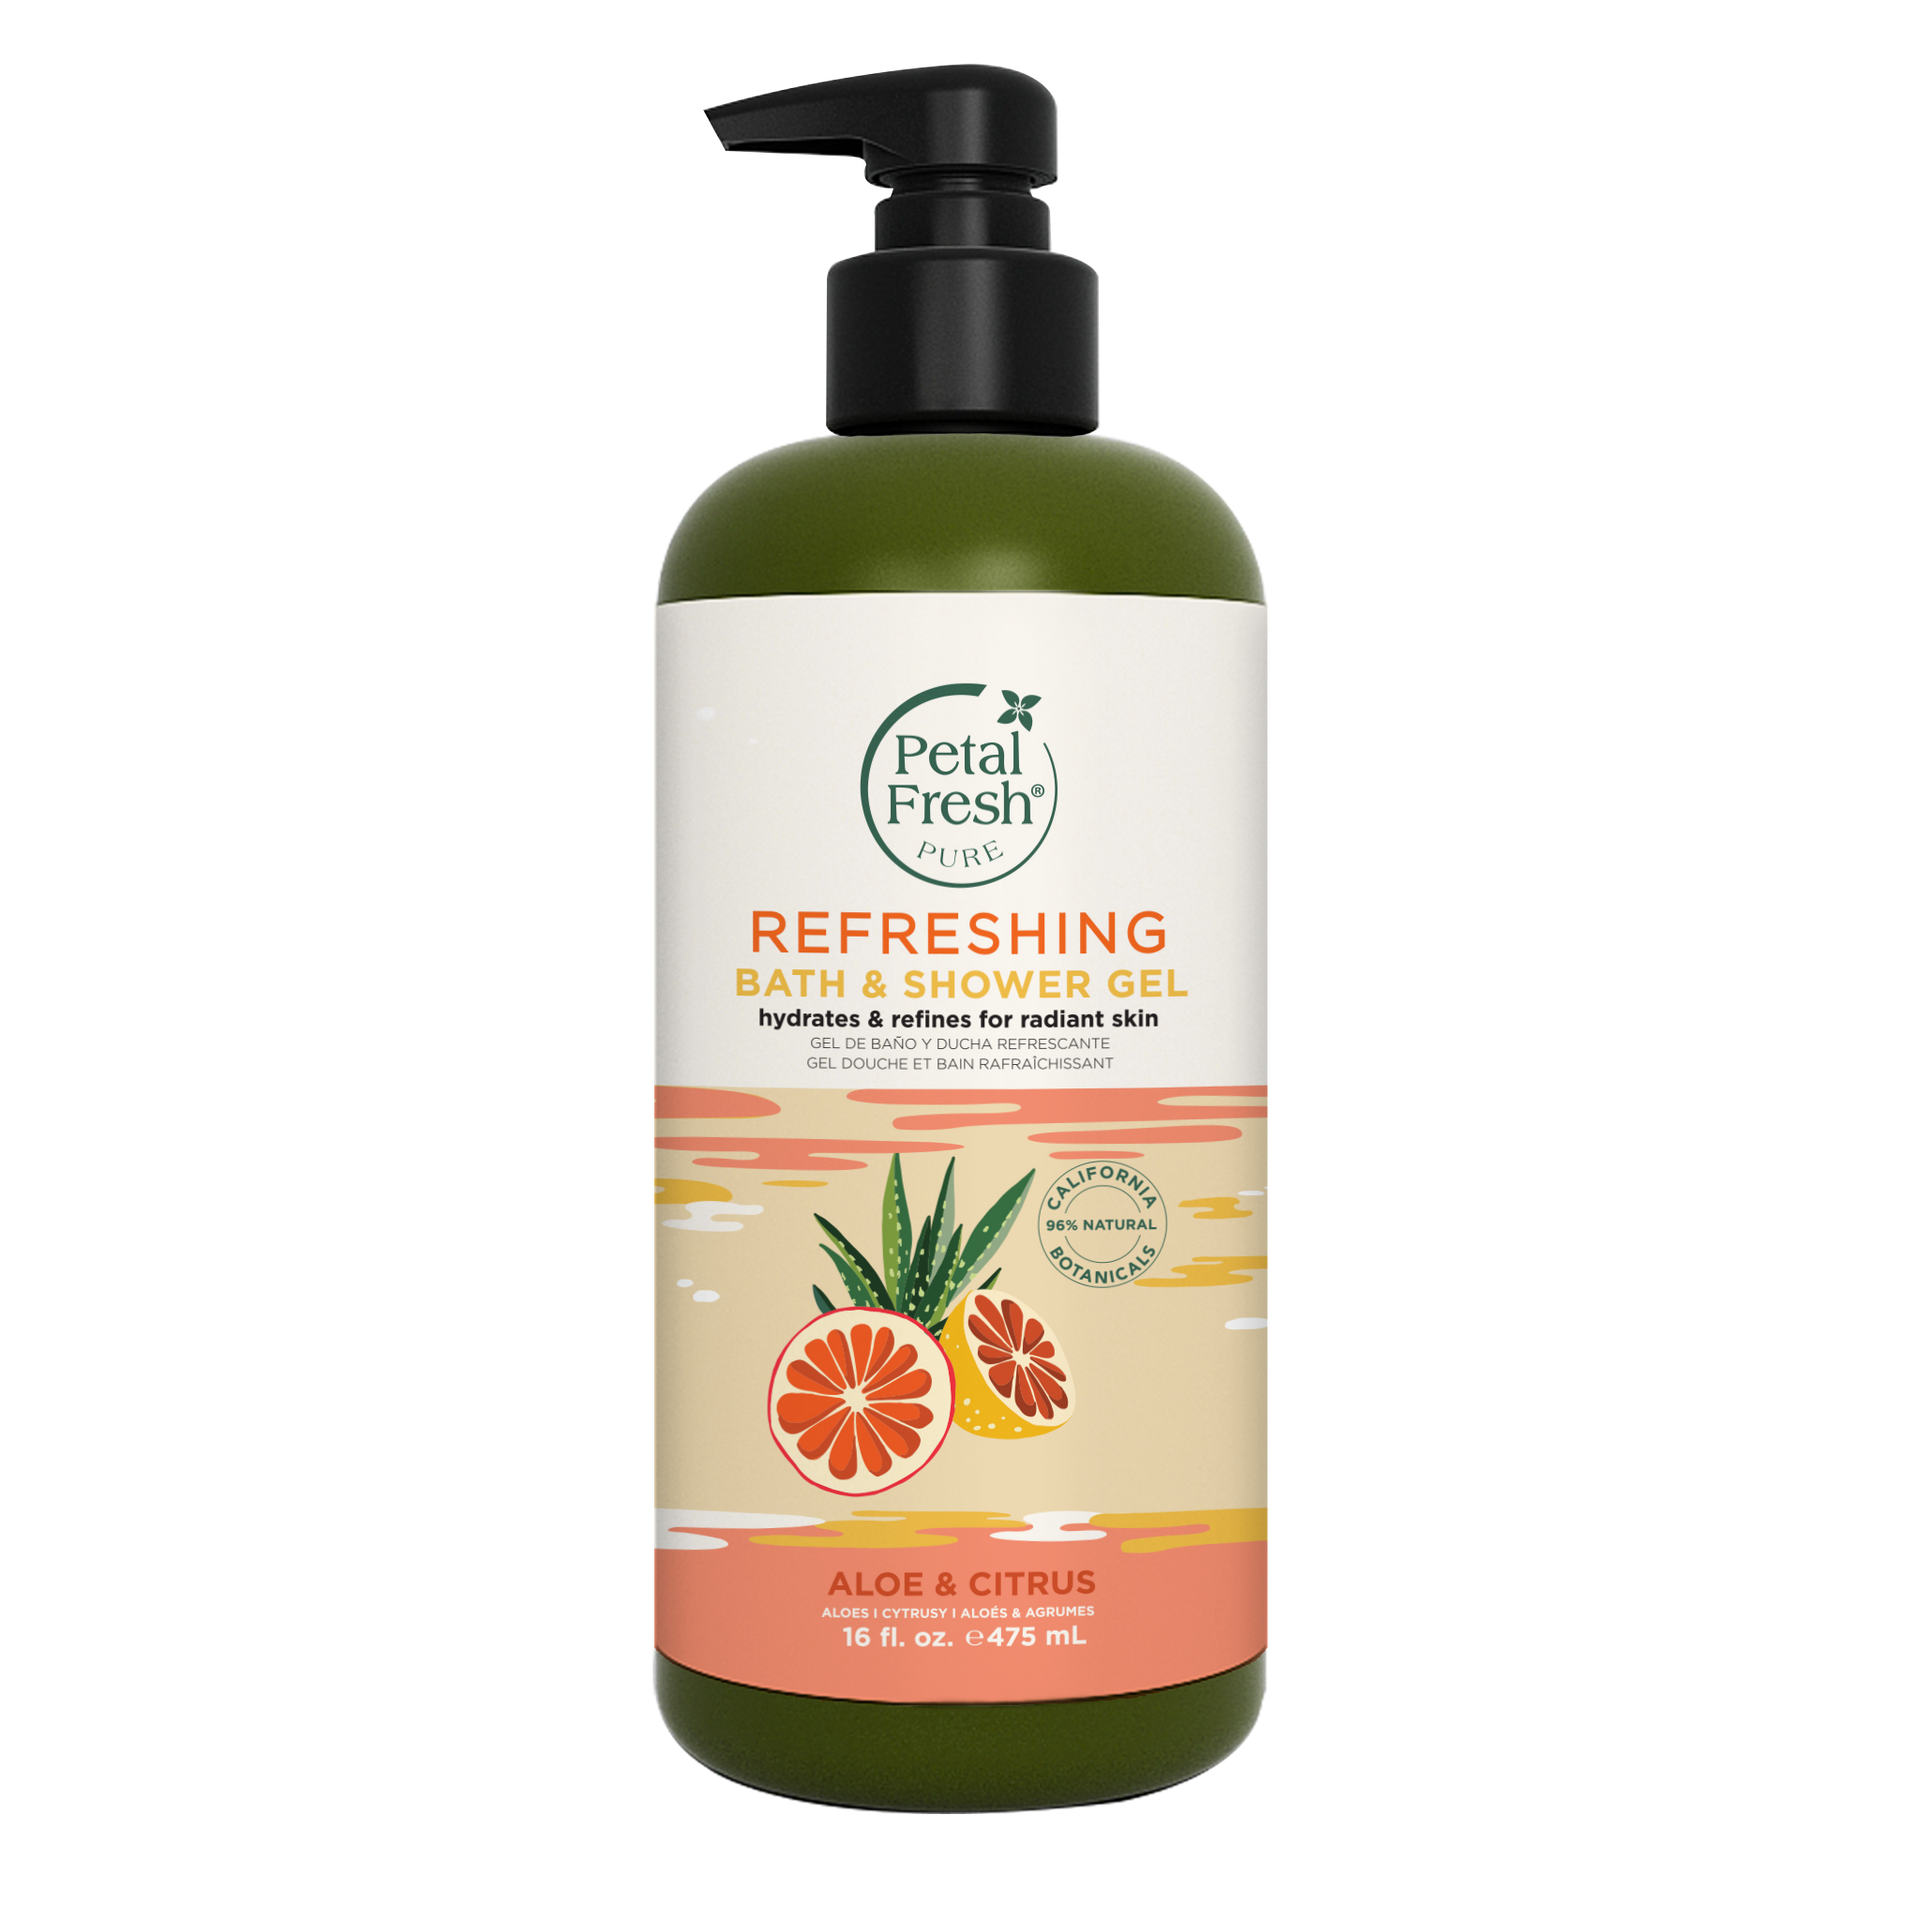 Refreshing Bath & Shower Gel with Aloe & Citrus – Petal Fresh